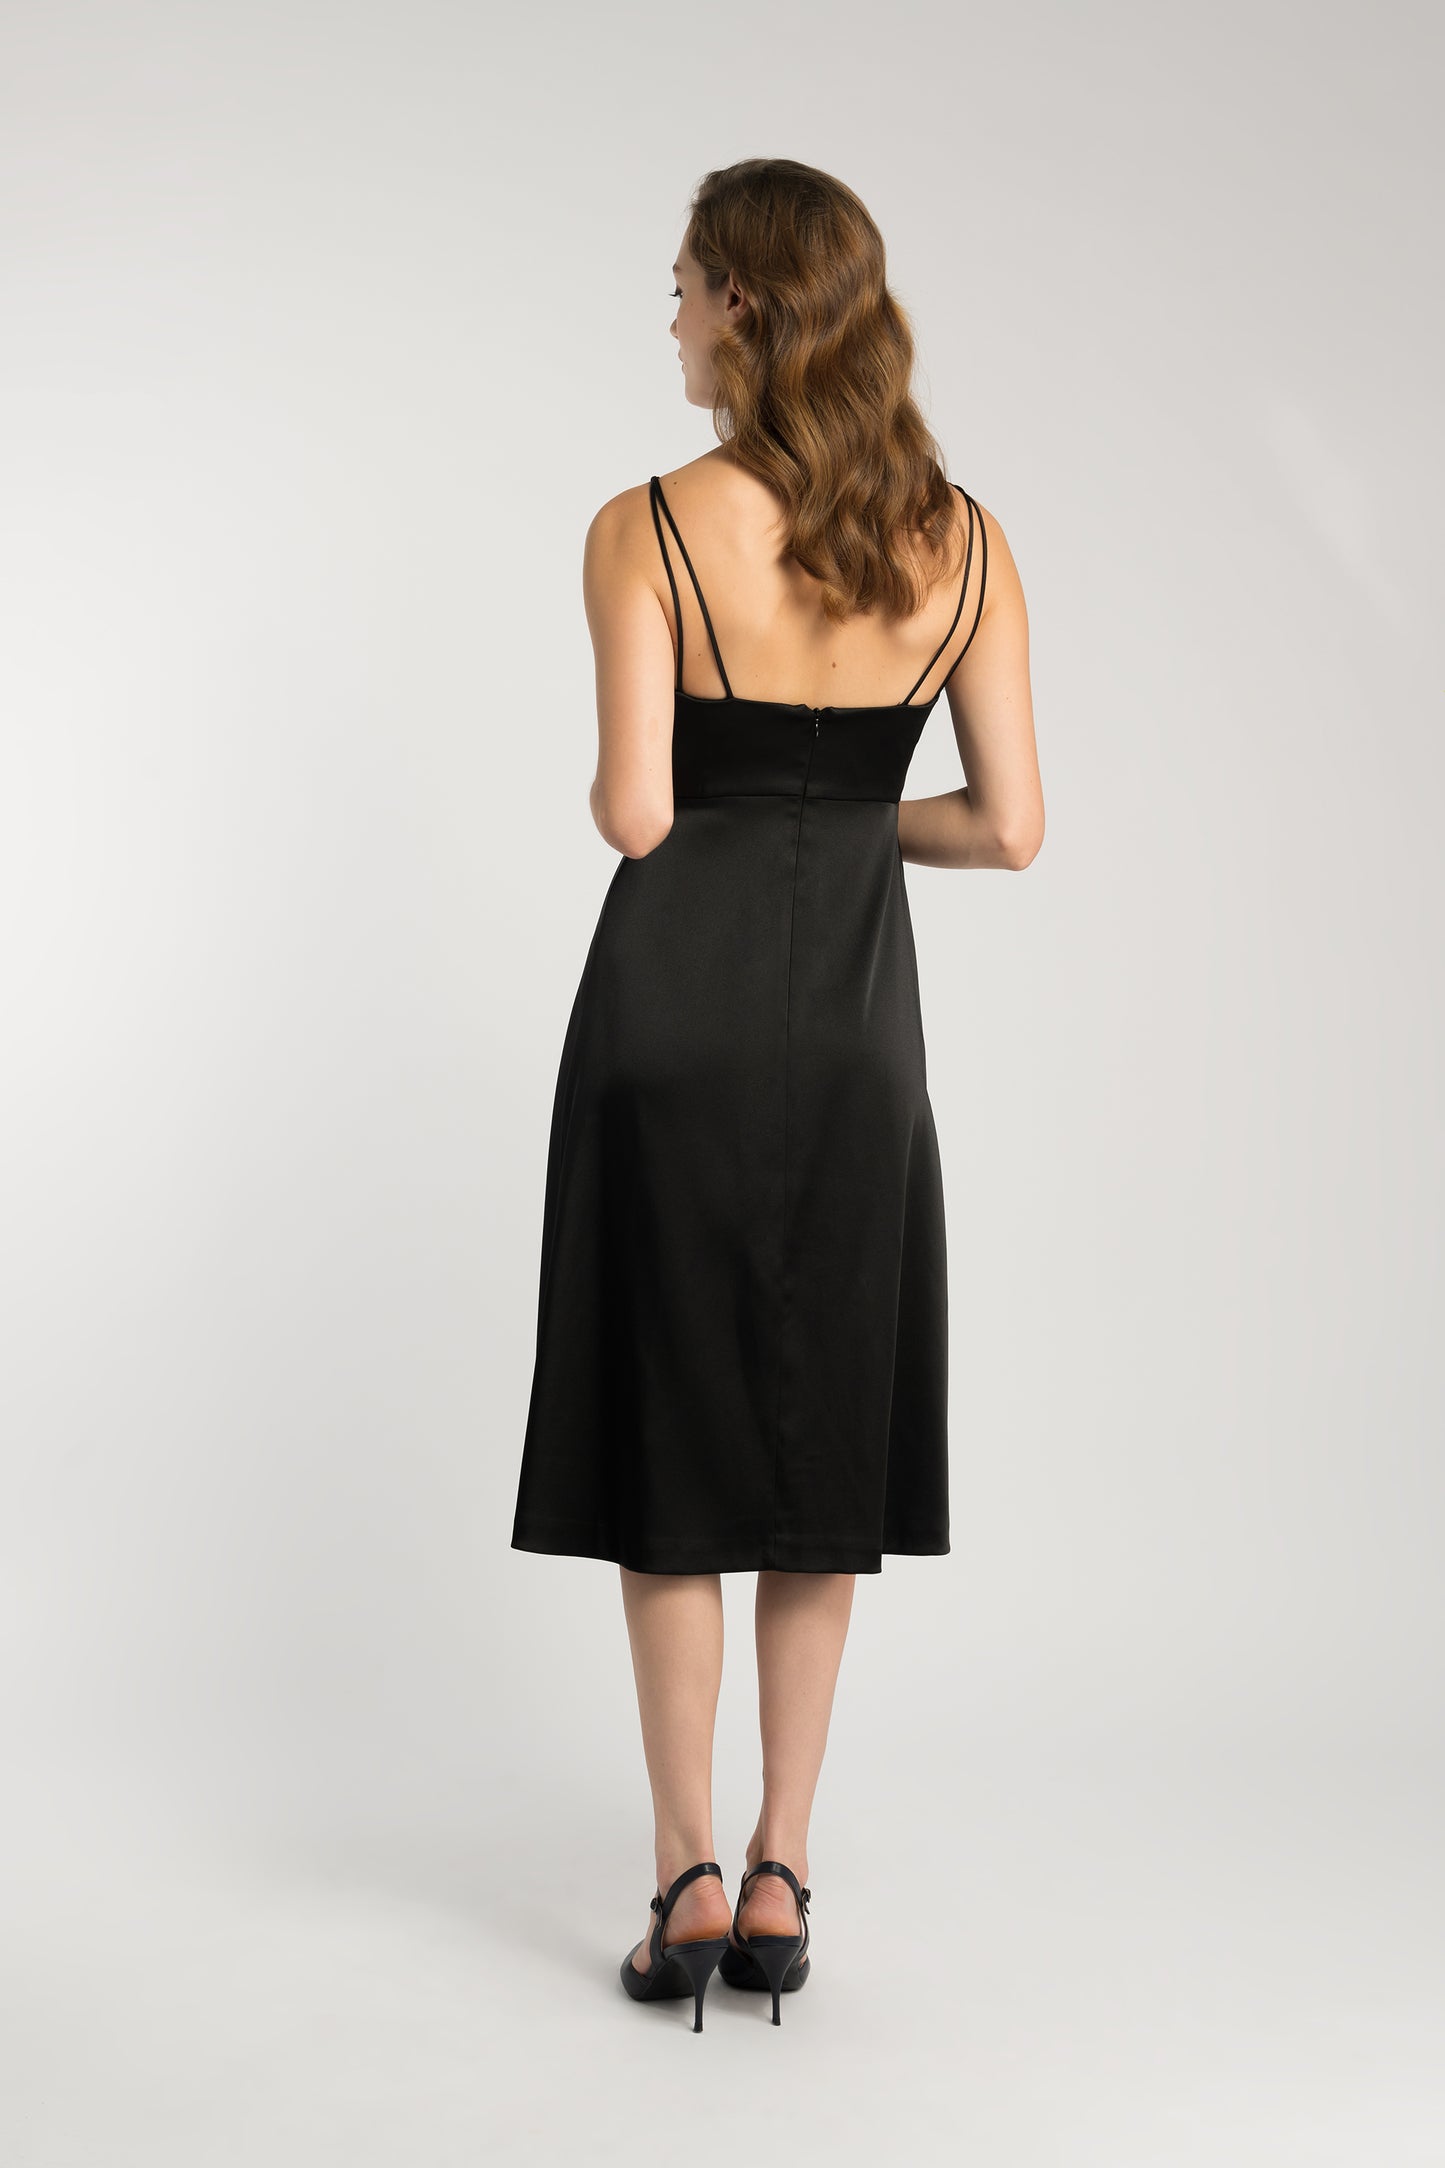 Strappy Cocktail Dress - Black